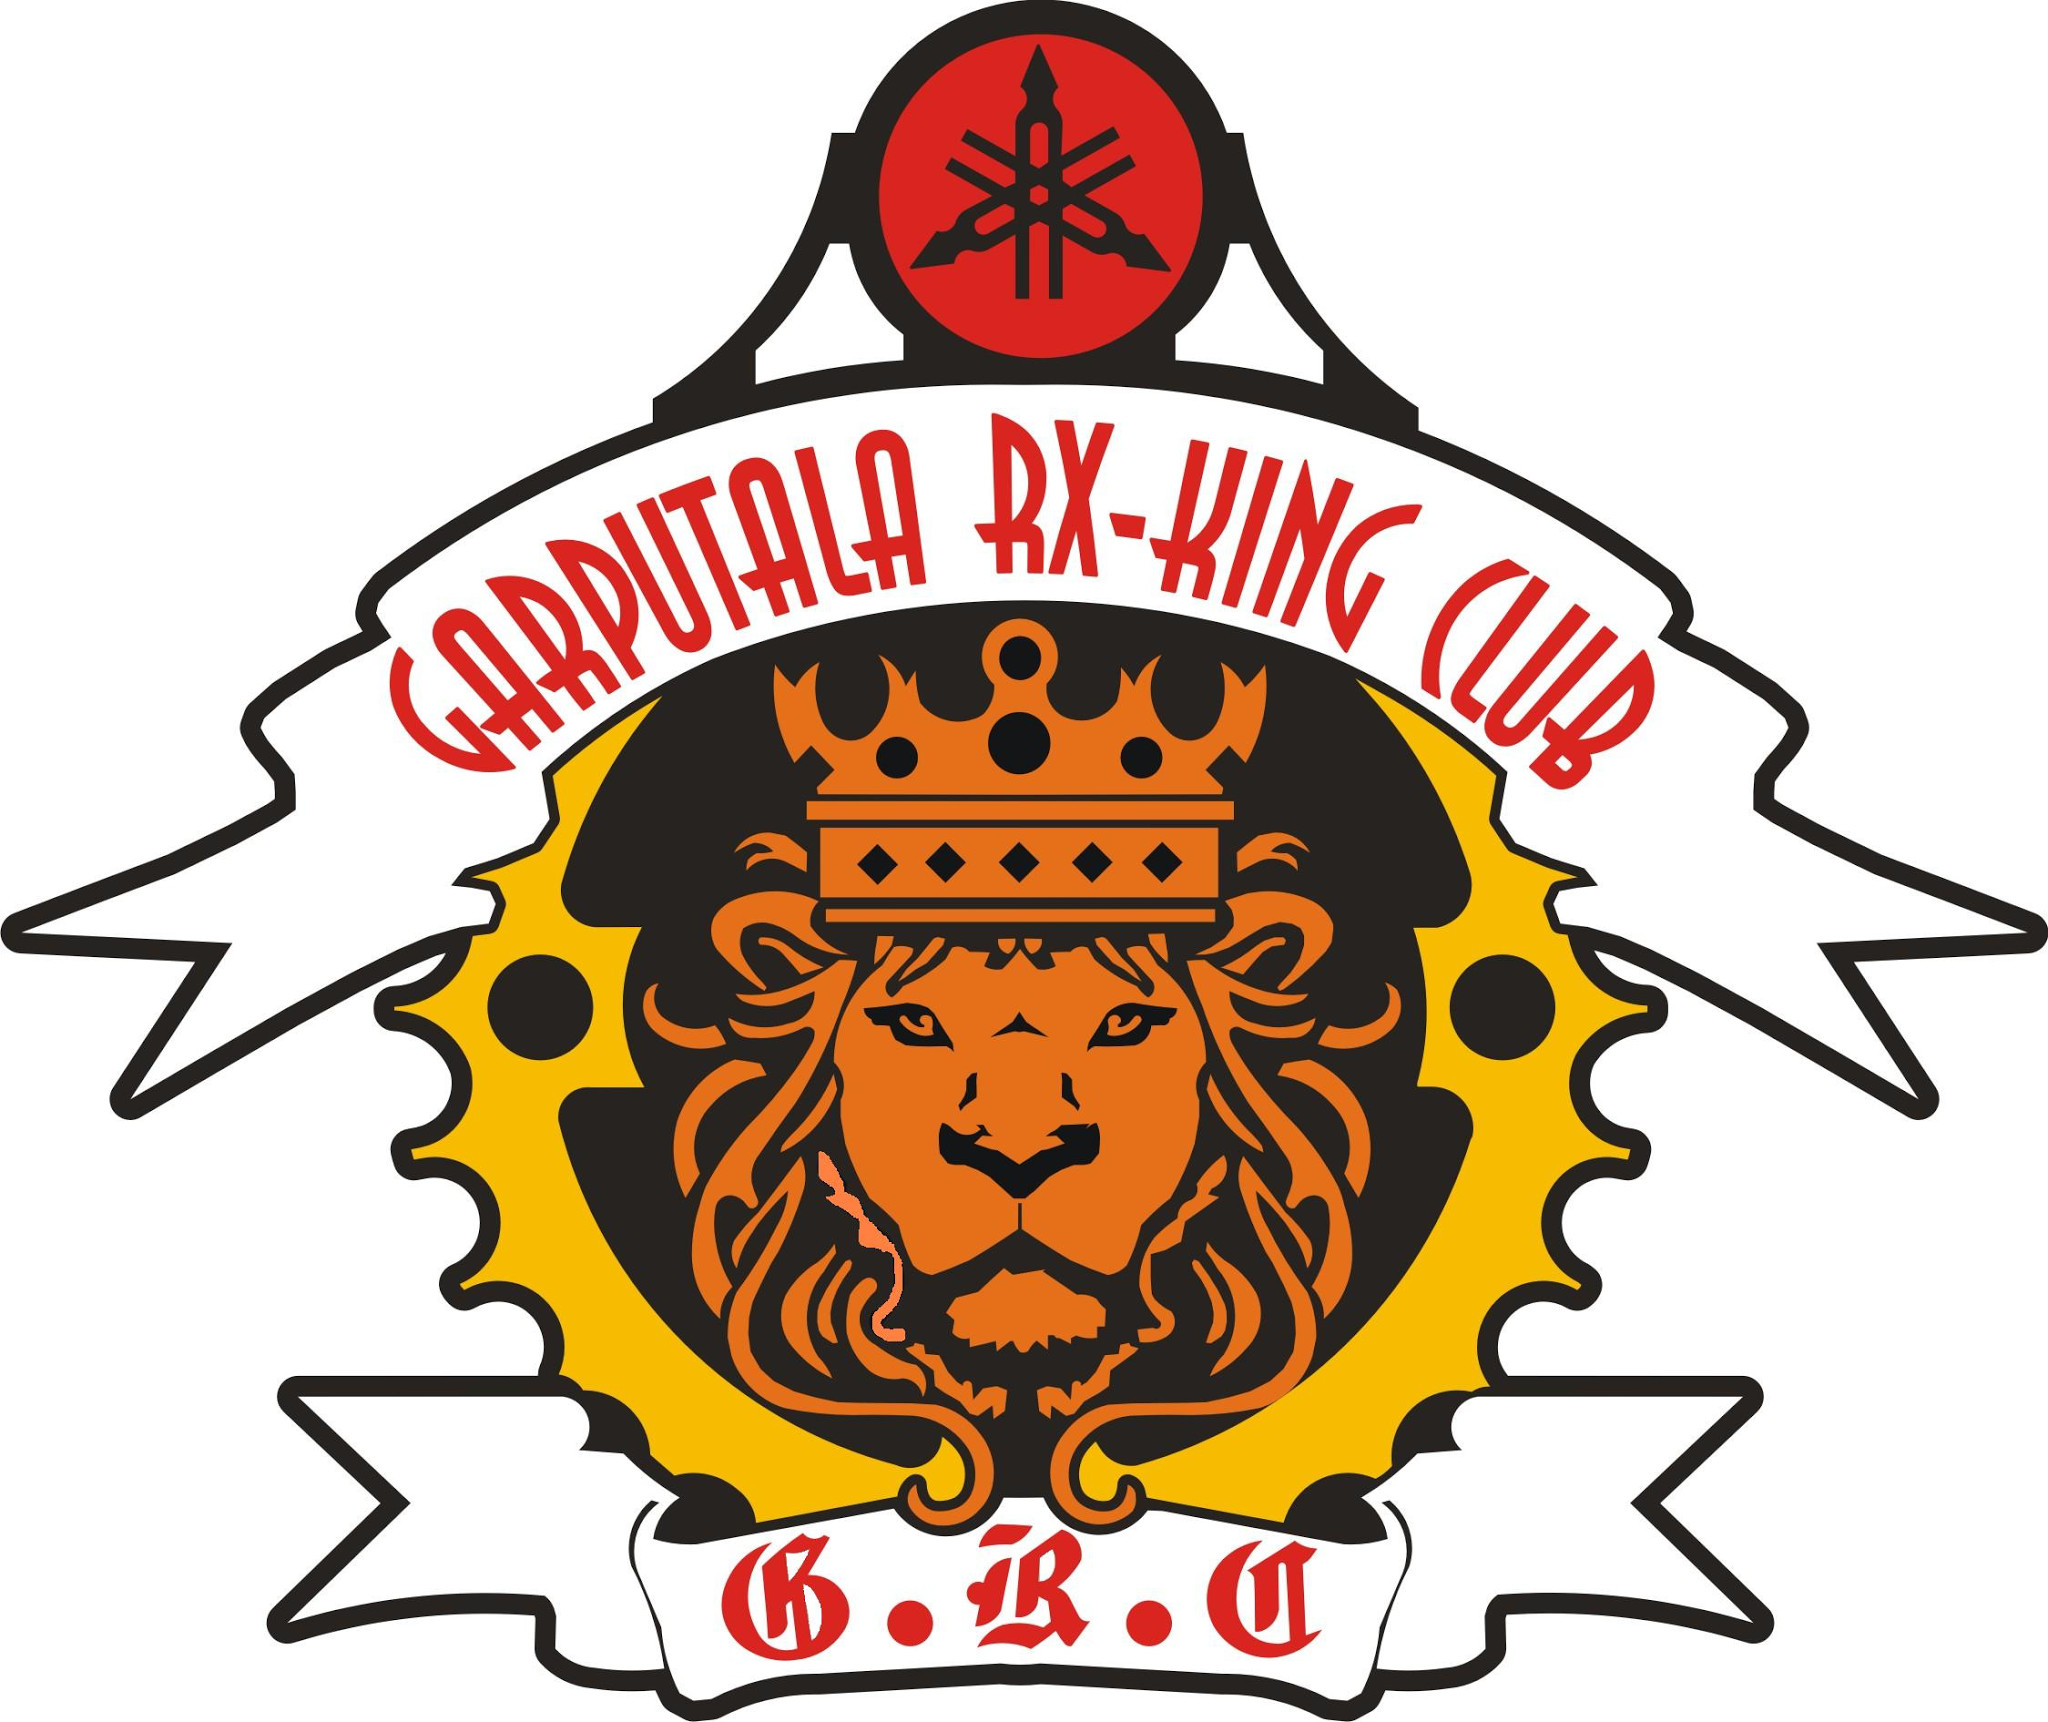 Garputala RX-King Club (GRC) YRKI-070+GRC